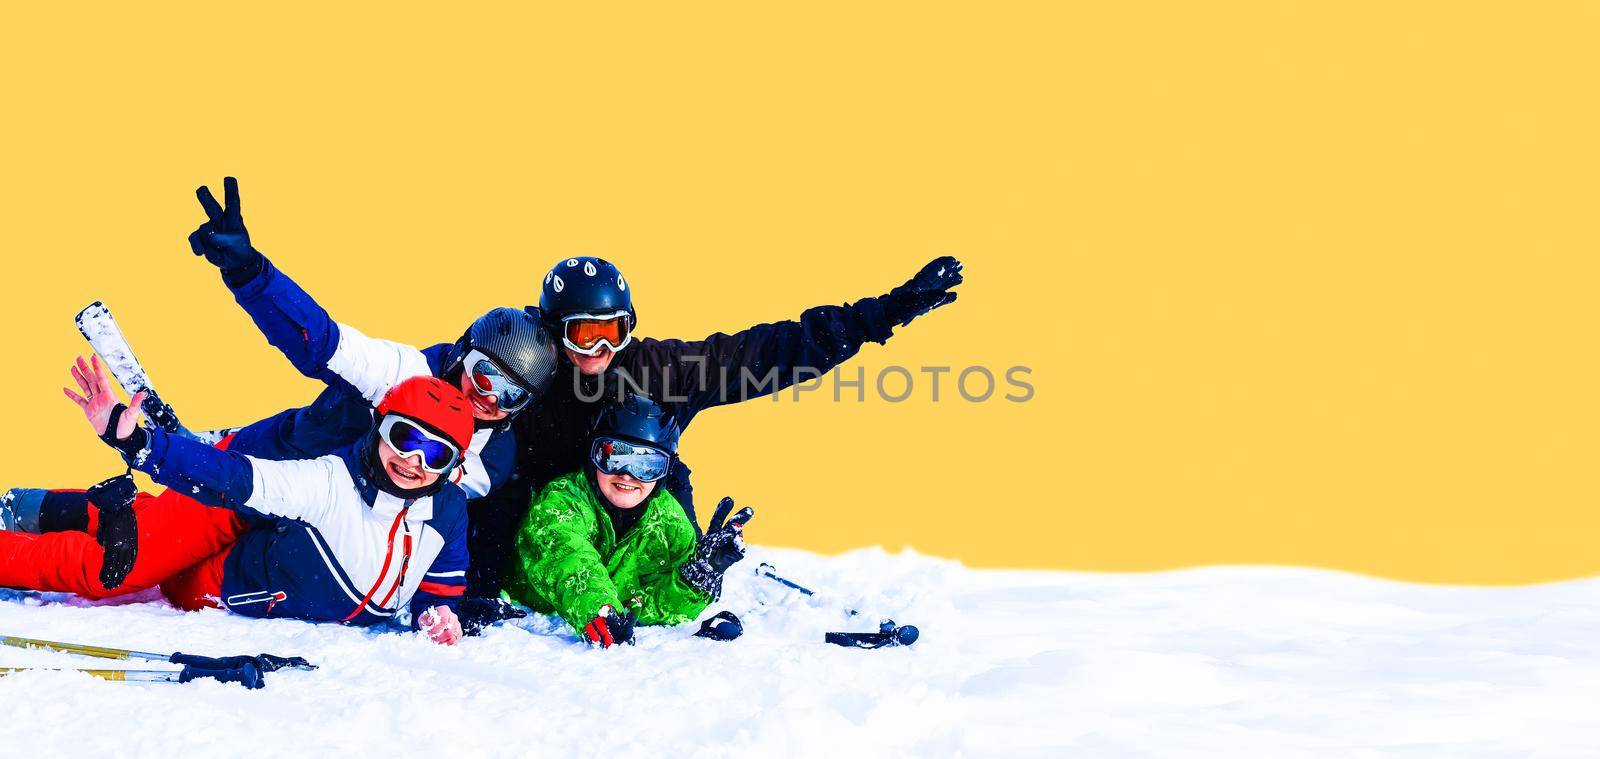 Smiling ski friends skiing alps resort.